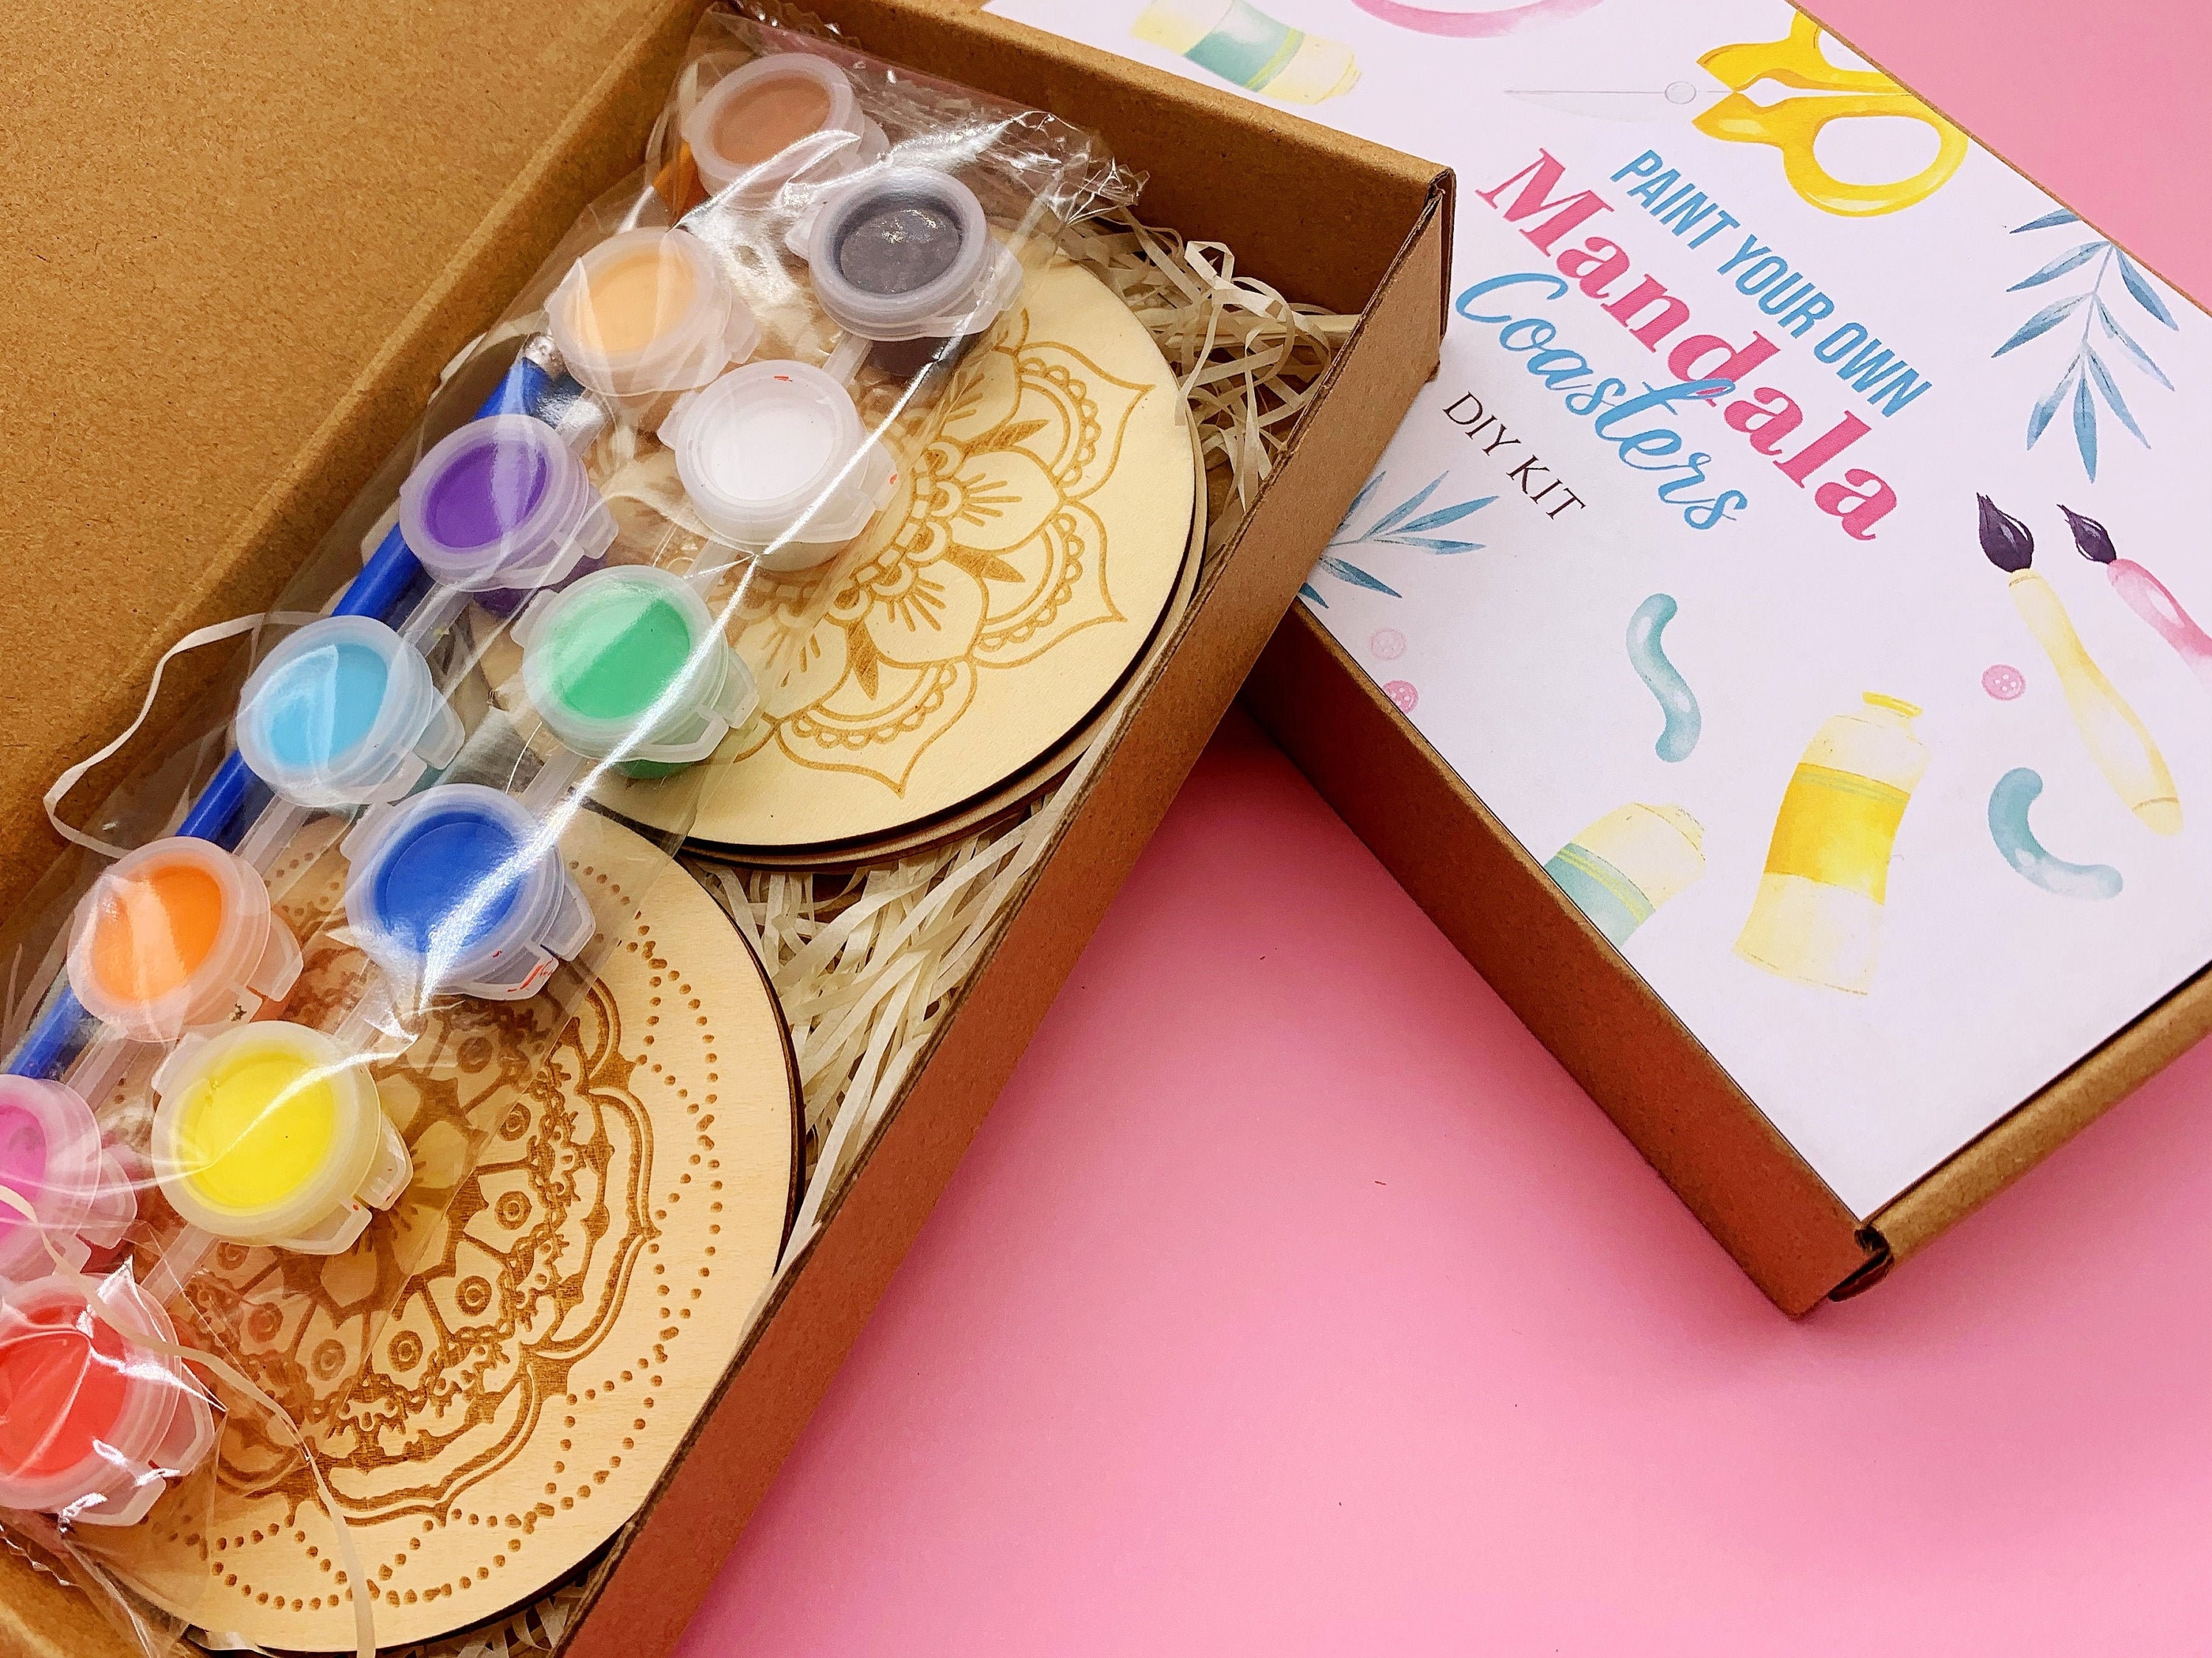 Mandala Art Kit Coasters with Stand-Craft Kit with Dot Mandala Art Too –  ToysCentral - Europe